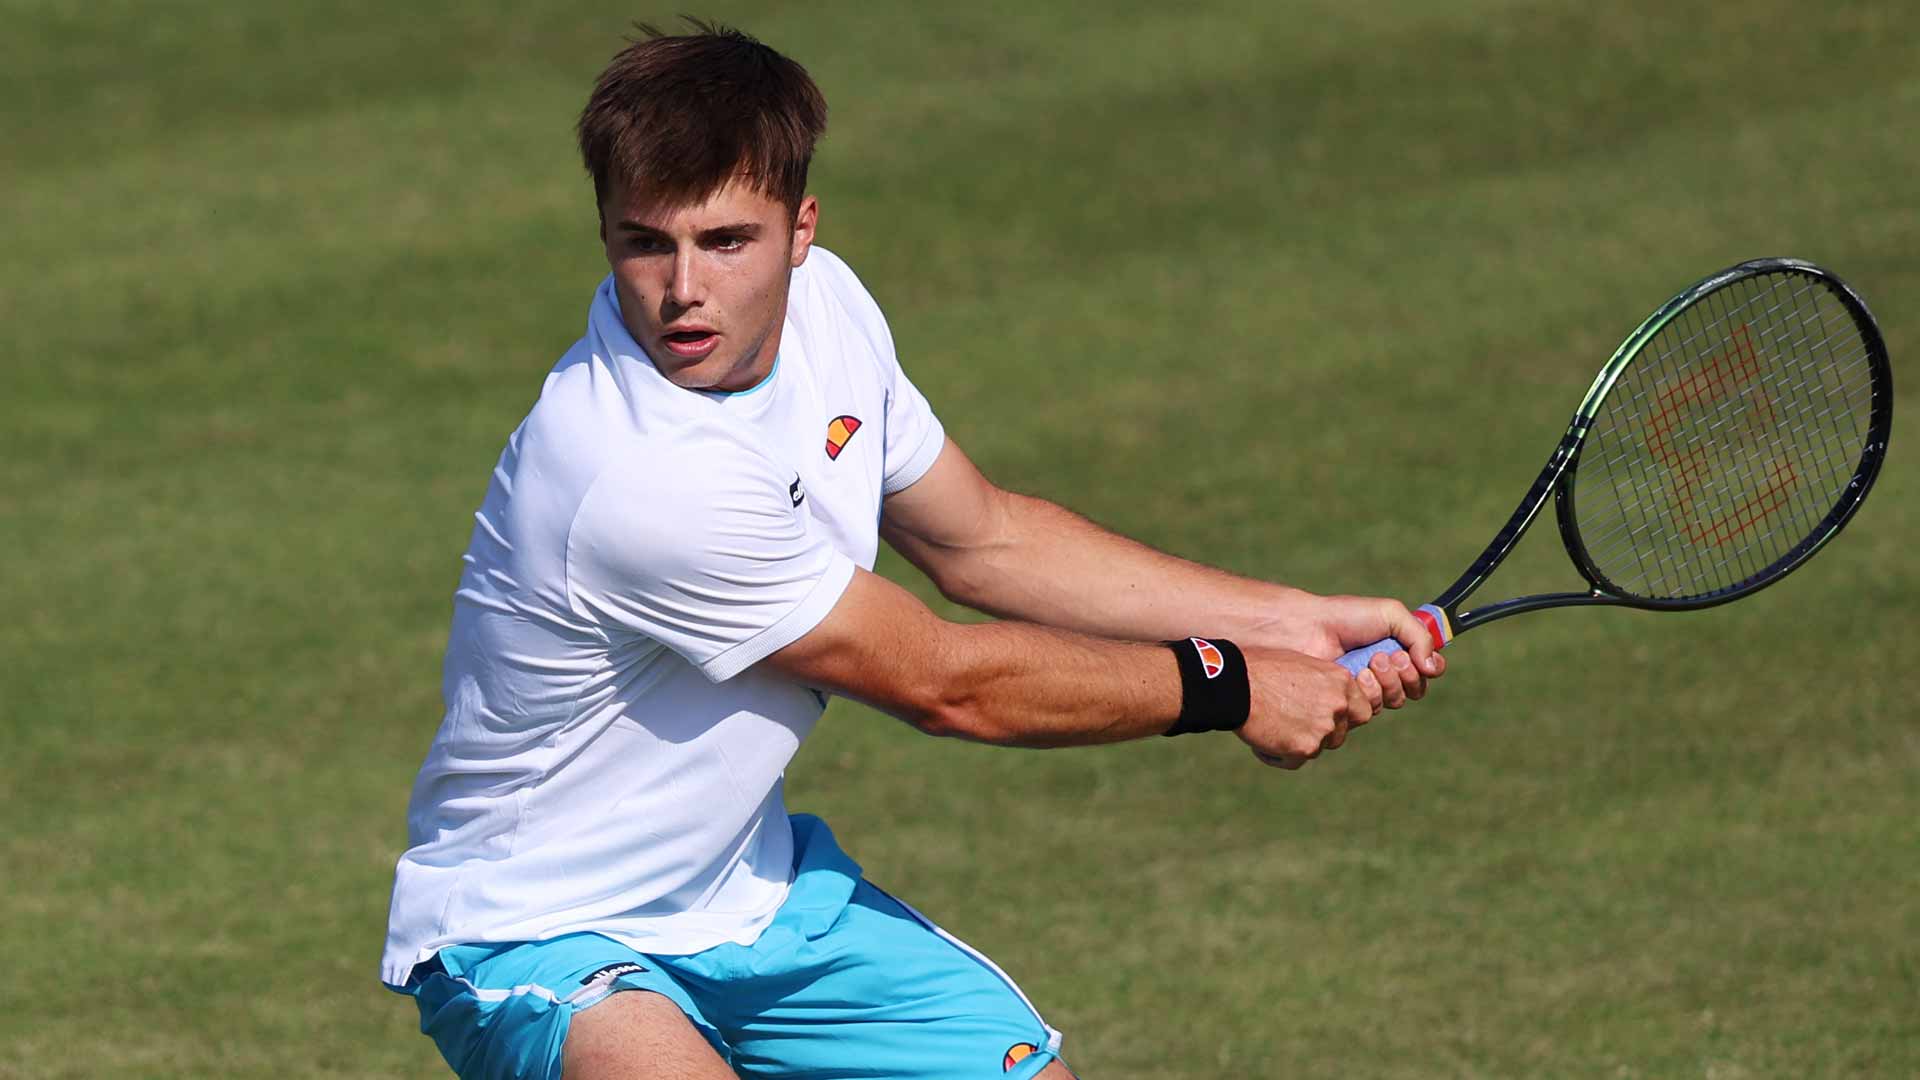 Arthur Fery will face World No. 3 Daniil Medvedev at Wimbledon on Tuesday.